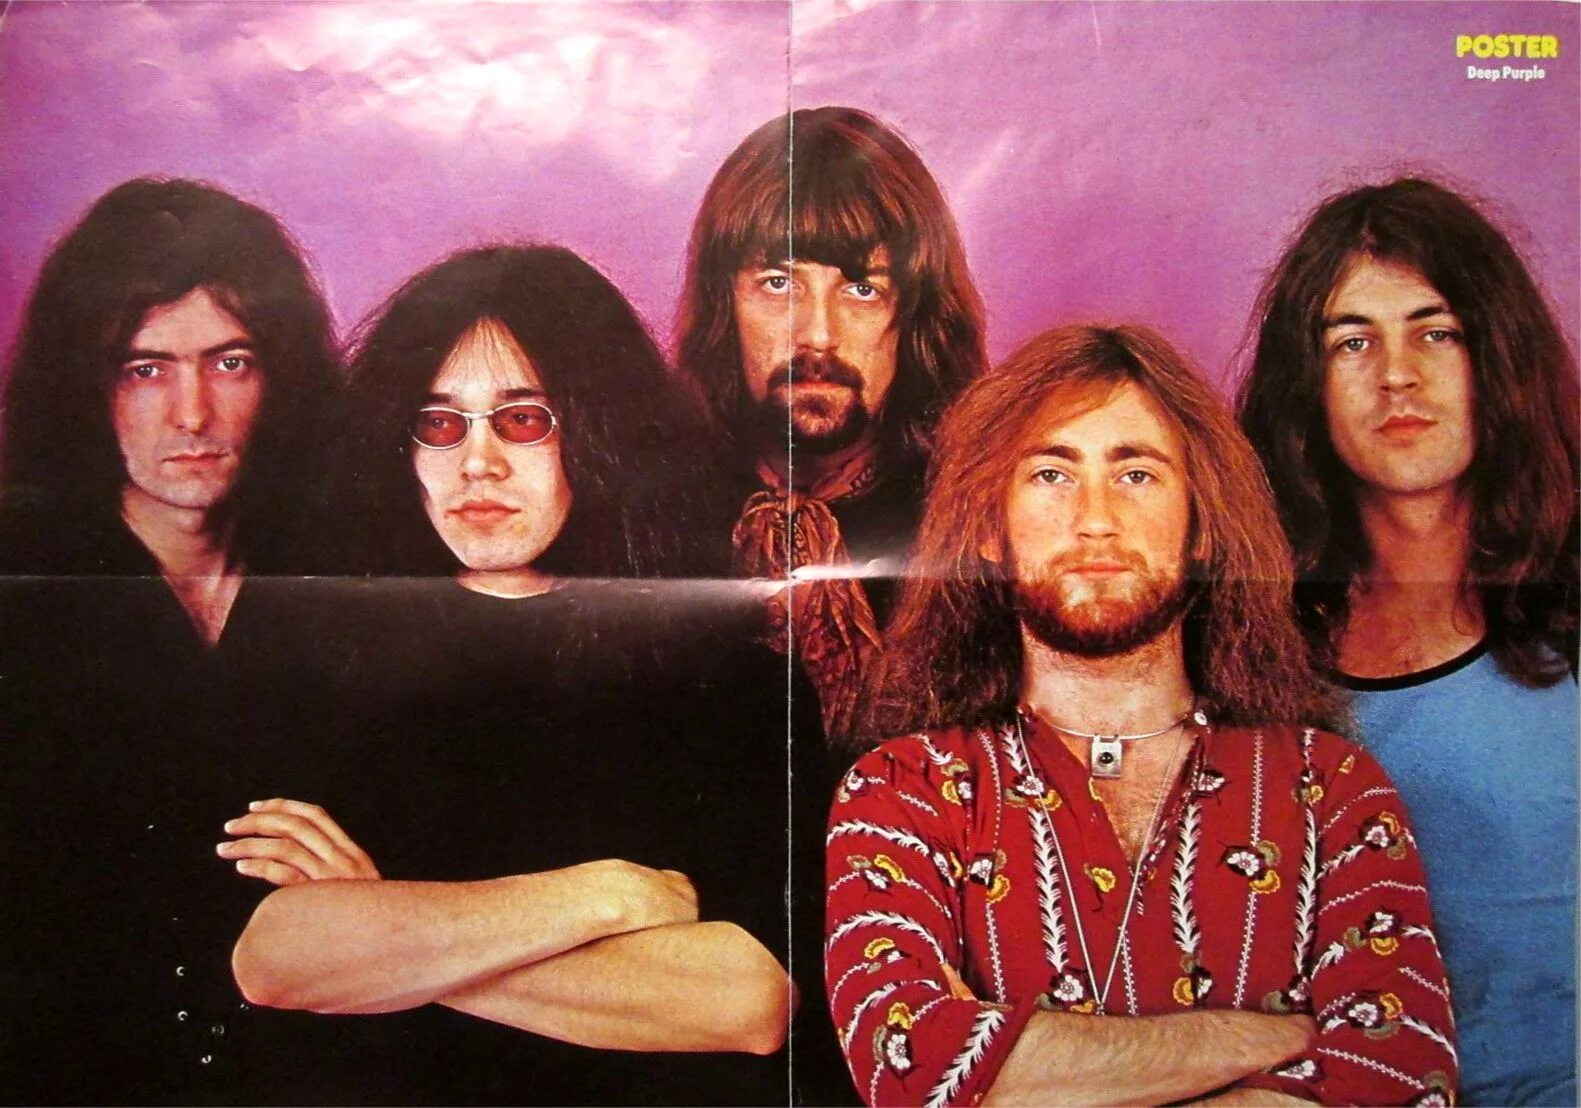 Ди перпл. Дип перпл. Группа дип перпл. Группа Deep Purple 1974. Группа Deep Purple 1973.